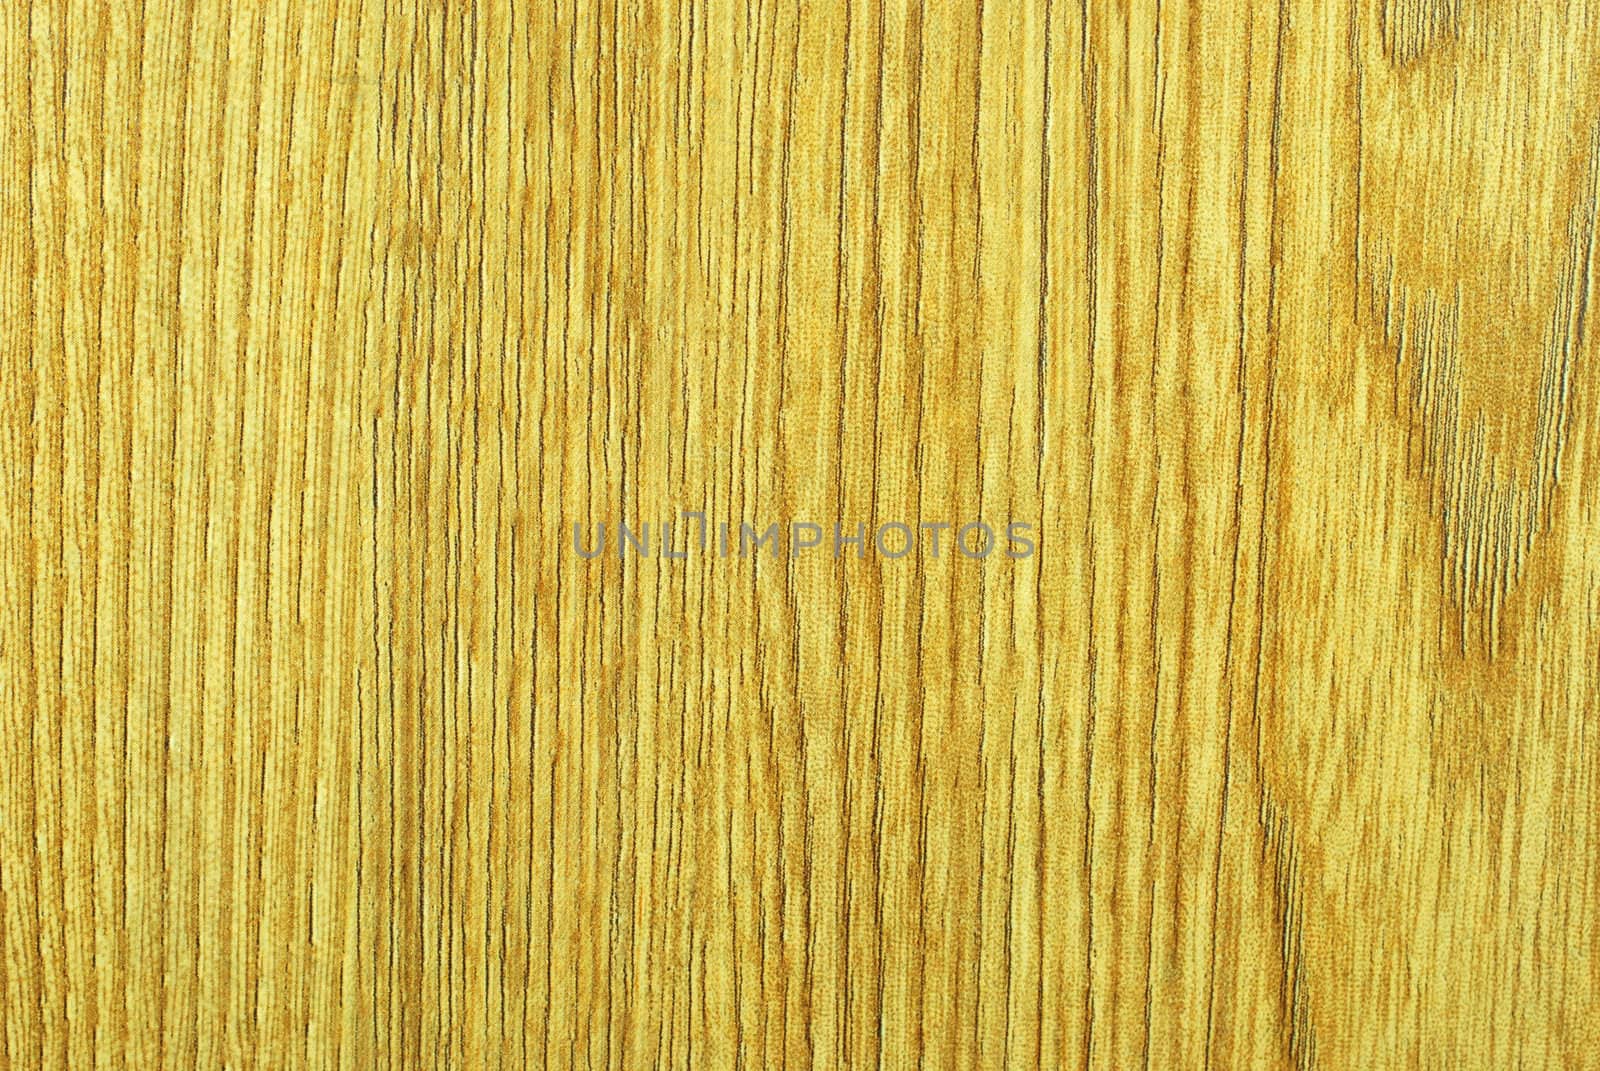 Macro of section of wood. 